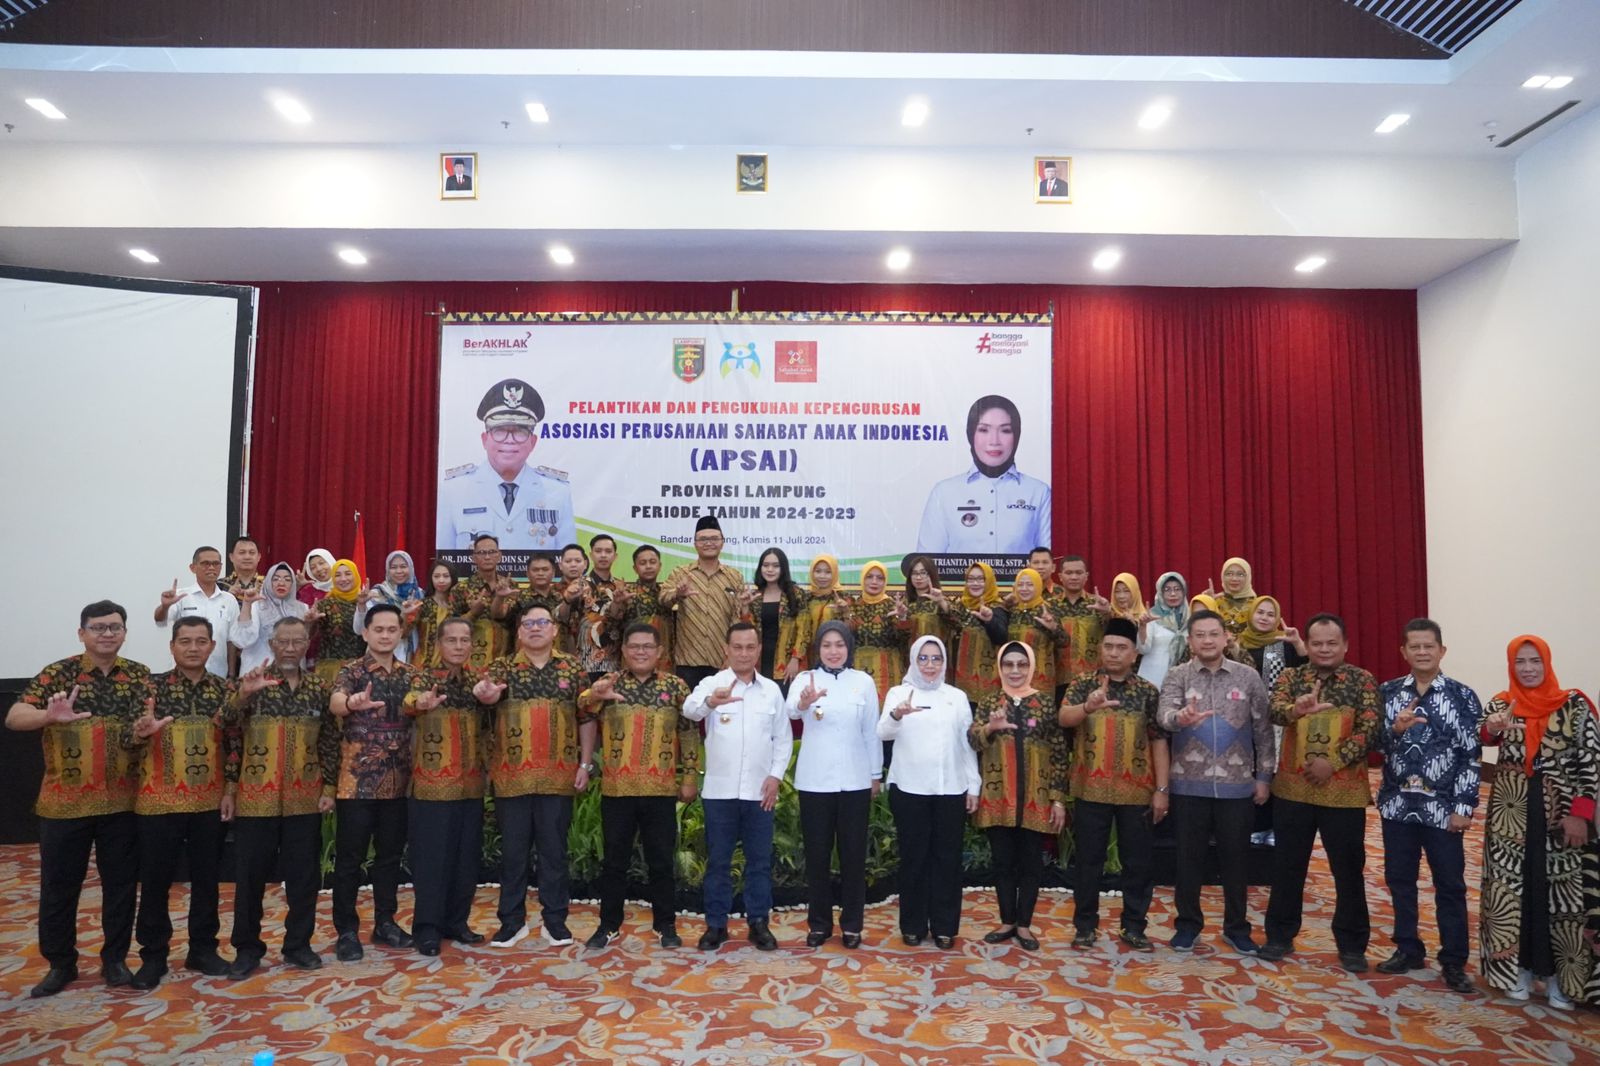 Pengurus Asosiasi Perusahaan Sahabat Anak Indonesia (APSAI) Provinsi Lampung Periode Tahun 2024-2029 Resmi Dilantik